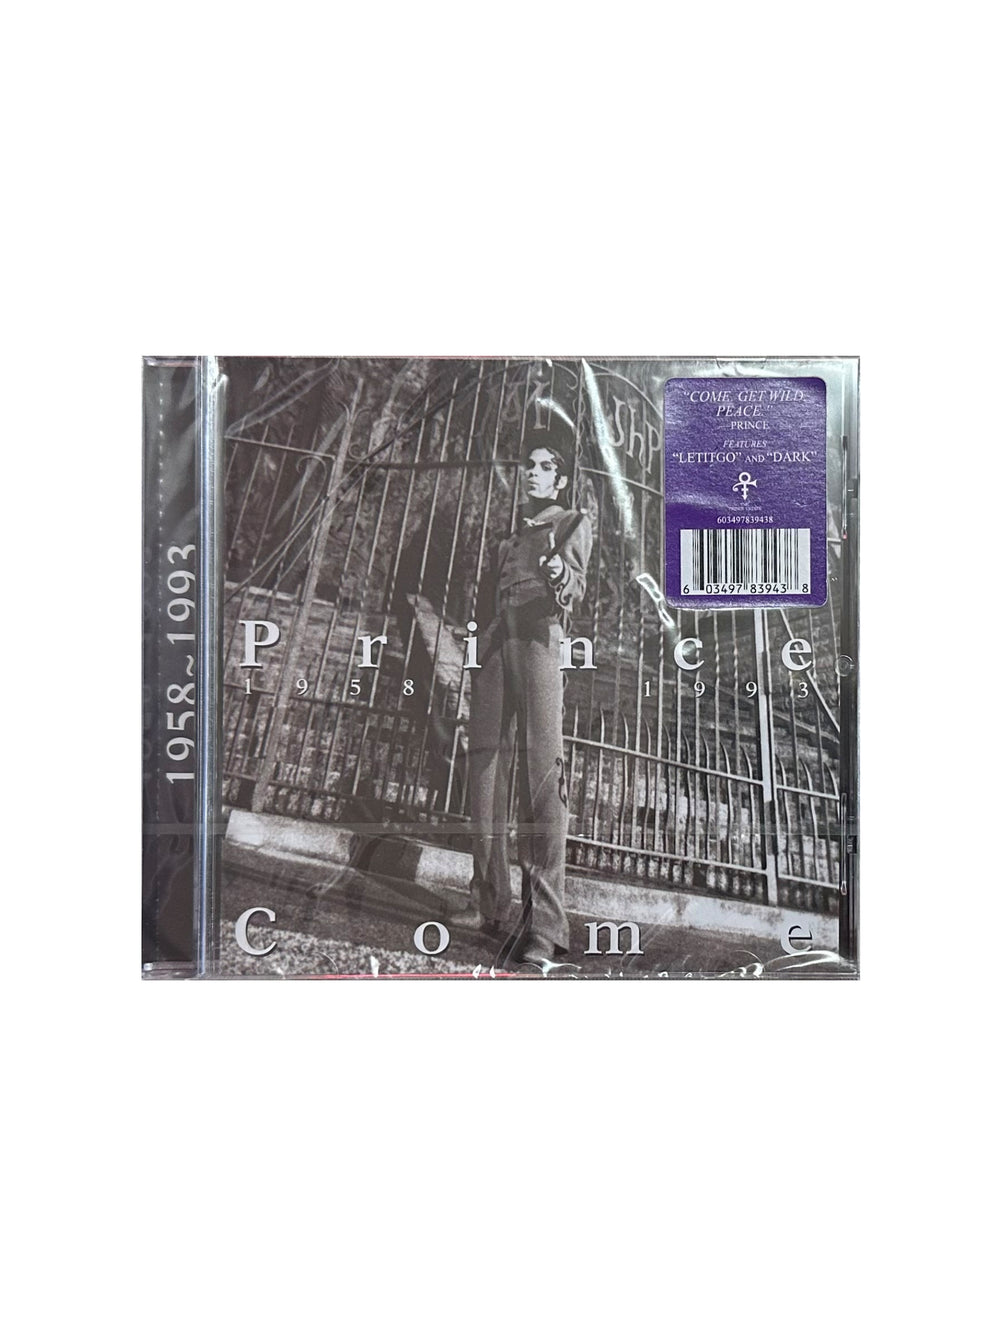 Prince – Come CD Album Reissue NPG Records Warner Records NEW 2022